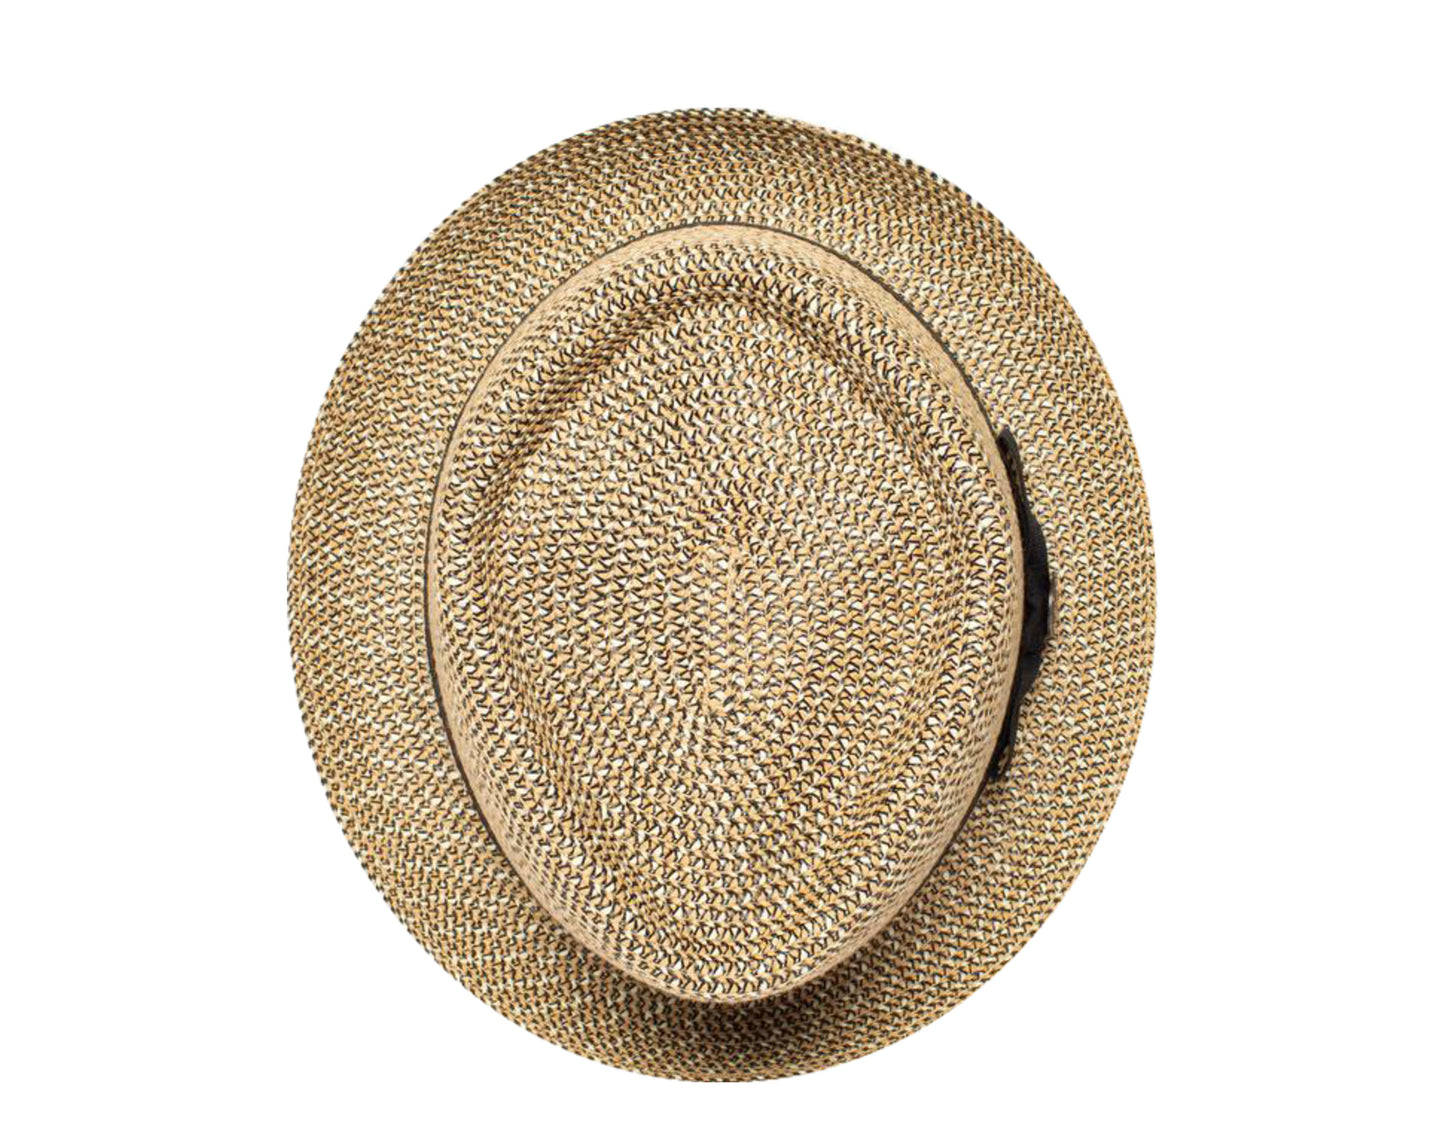 Goorin Bros Low Country Fedora Men's Hat